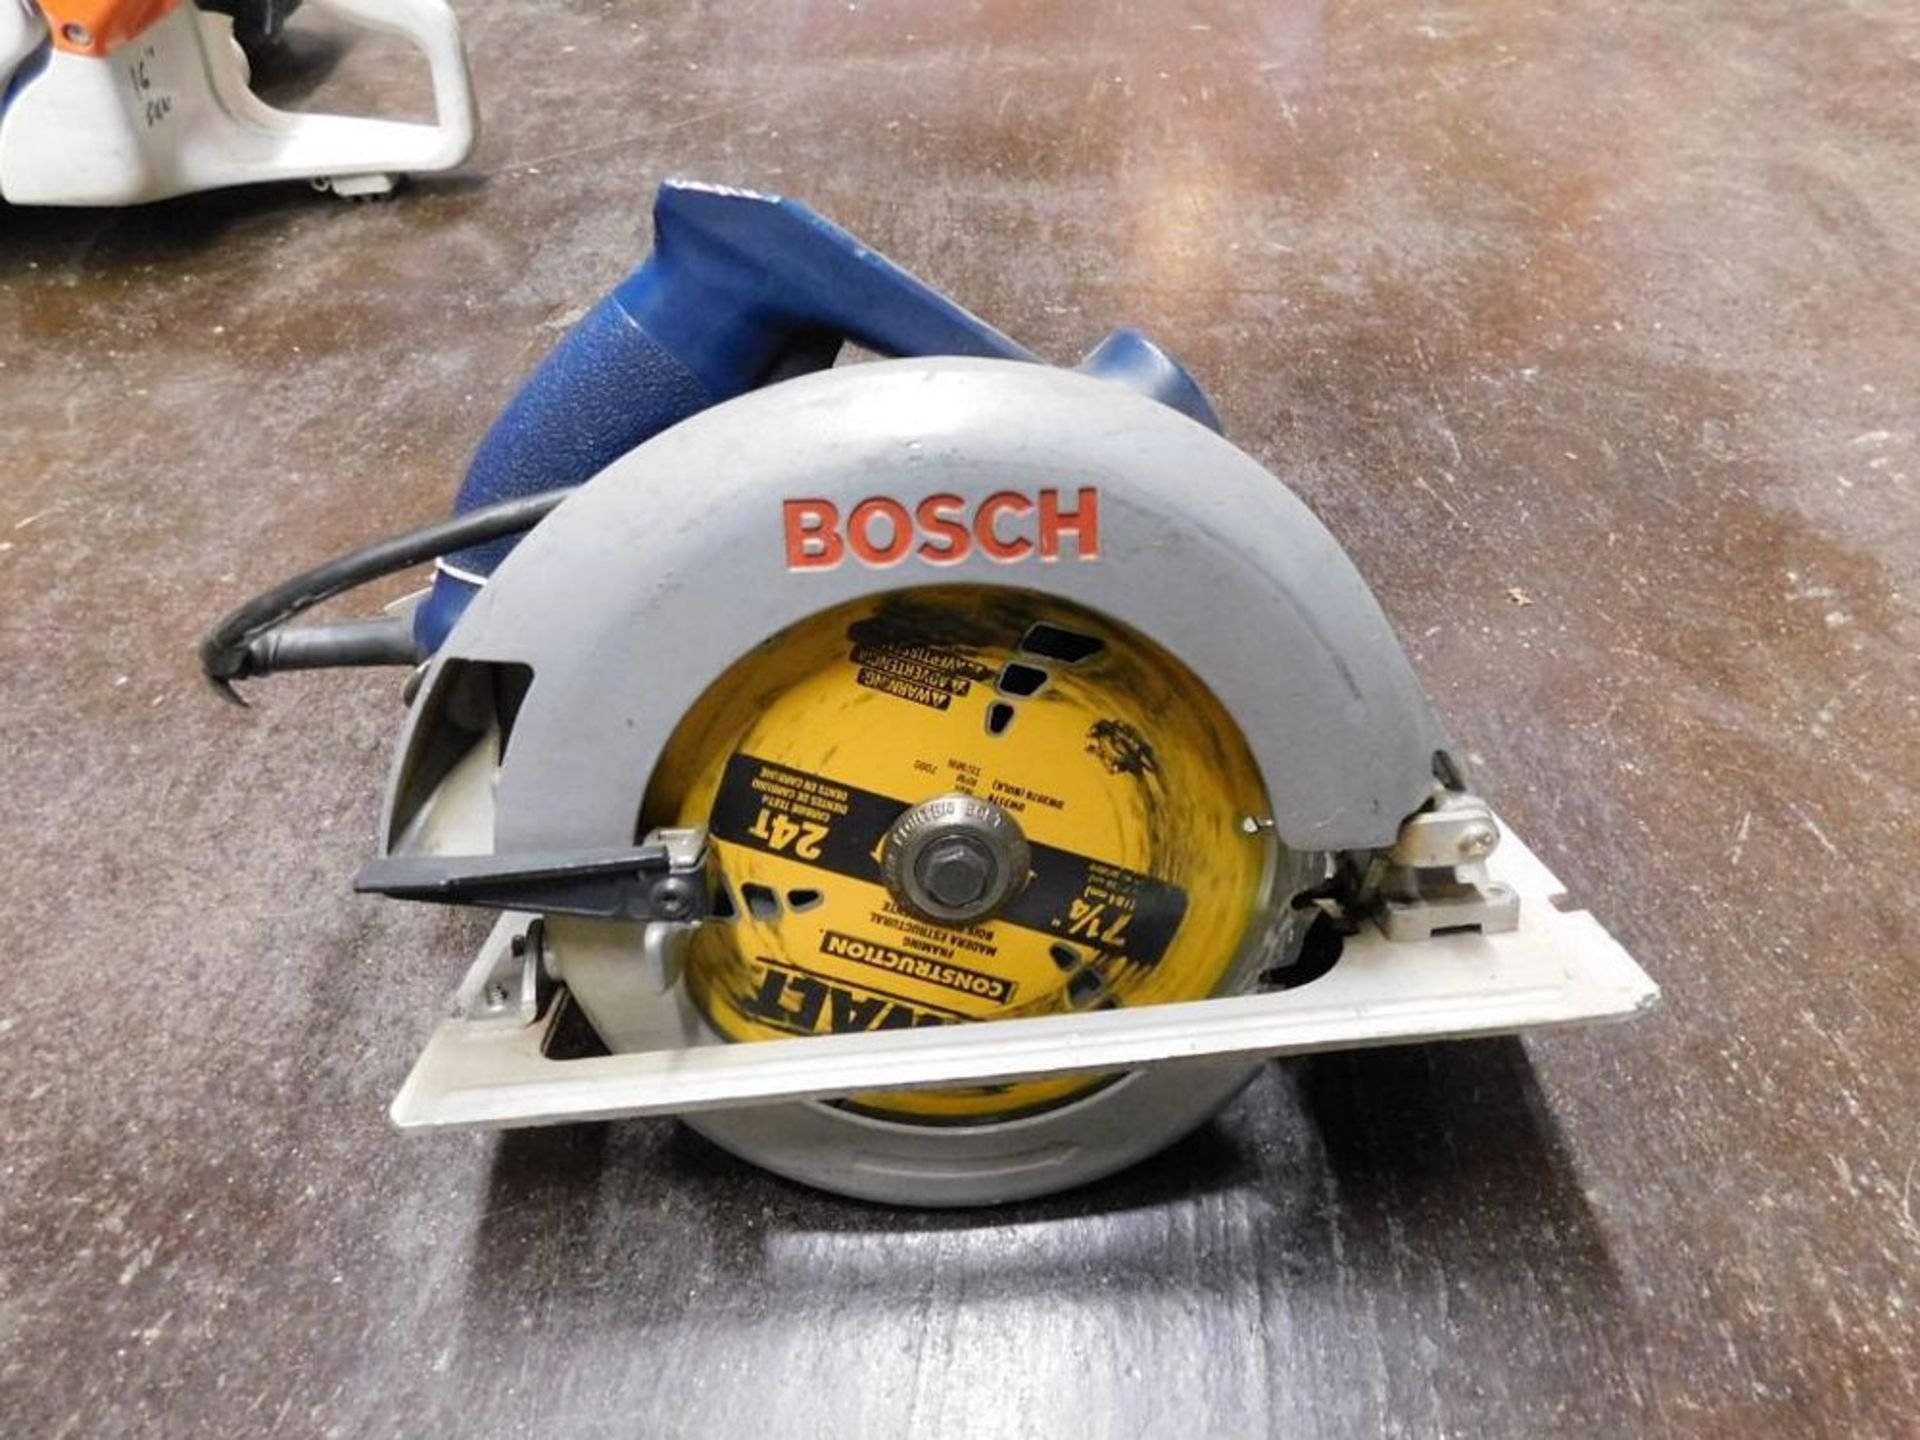 LOT: (1) Skil Saw 8-1/4" Circular Saw, (1) Bosch 1412 VSR Drywall Screw Driver, (1) Bosch 1023 VSR - Image 5 of 5